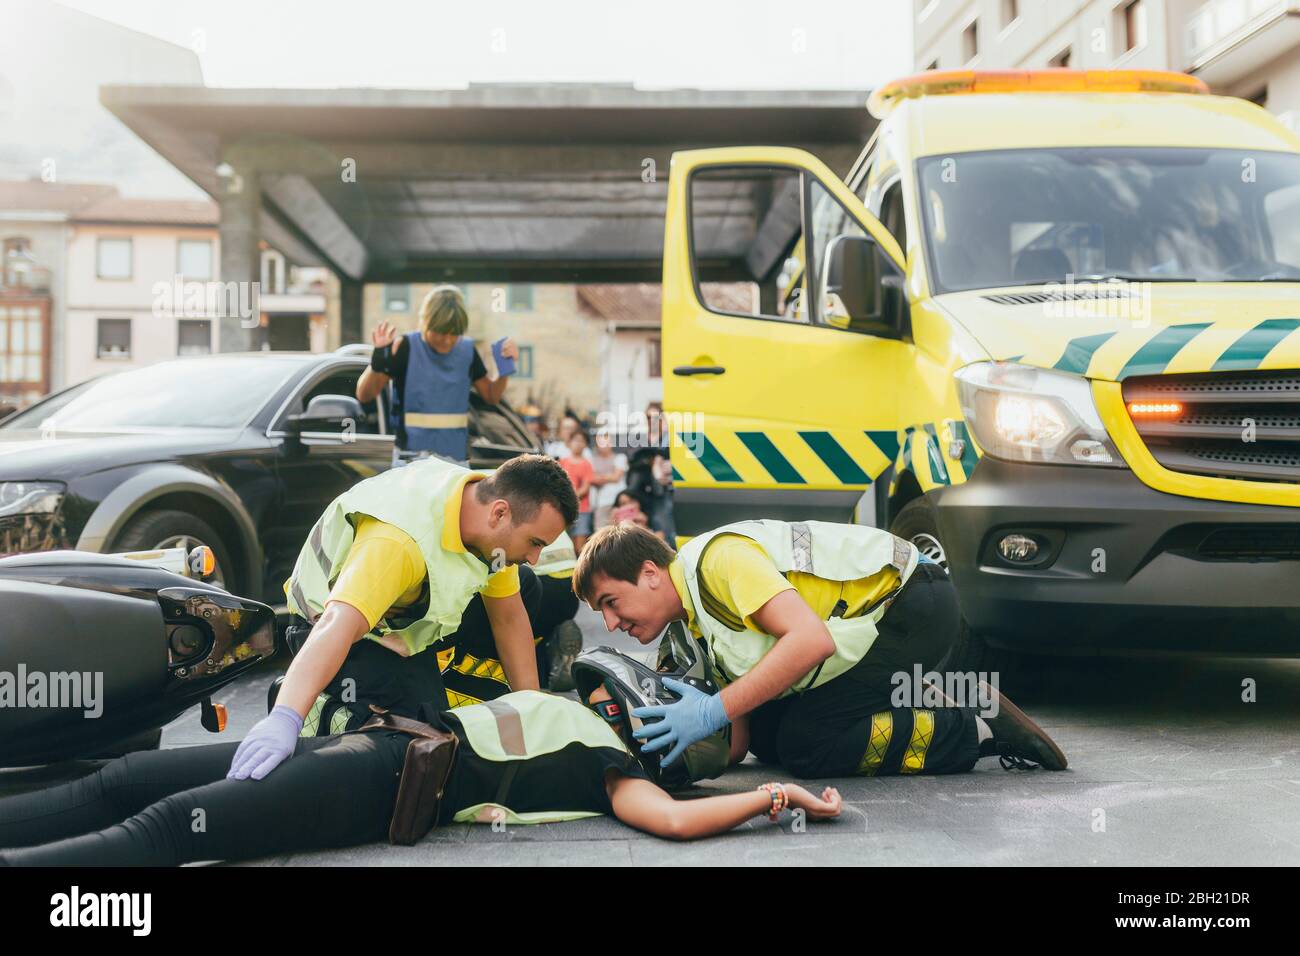 Paramedics helping crash victim after scooter accident Stock Photo